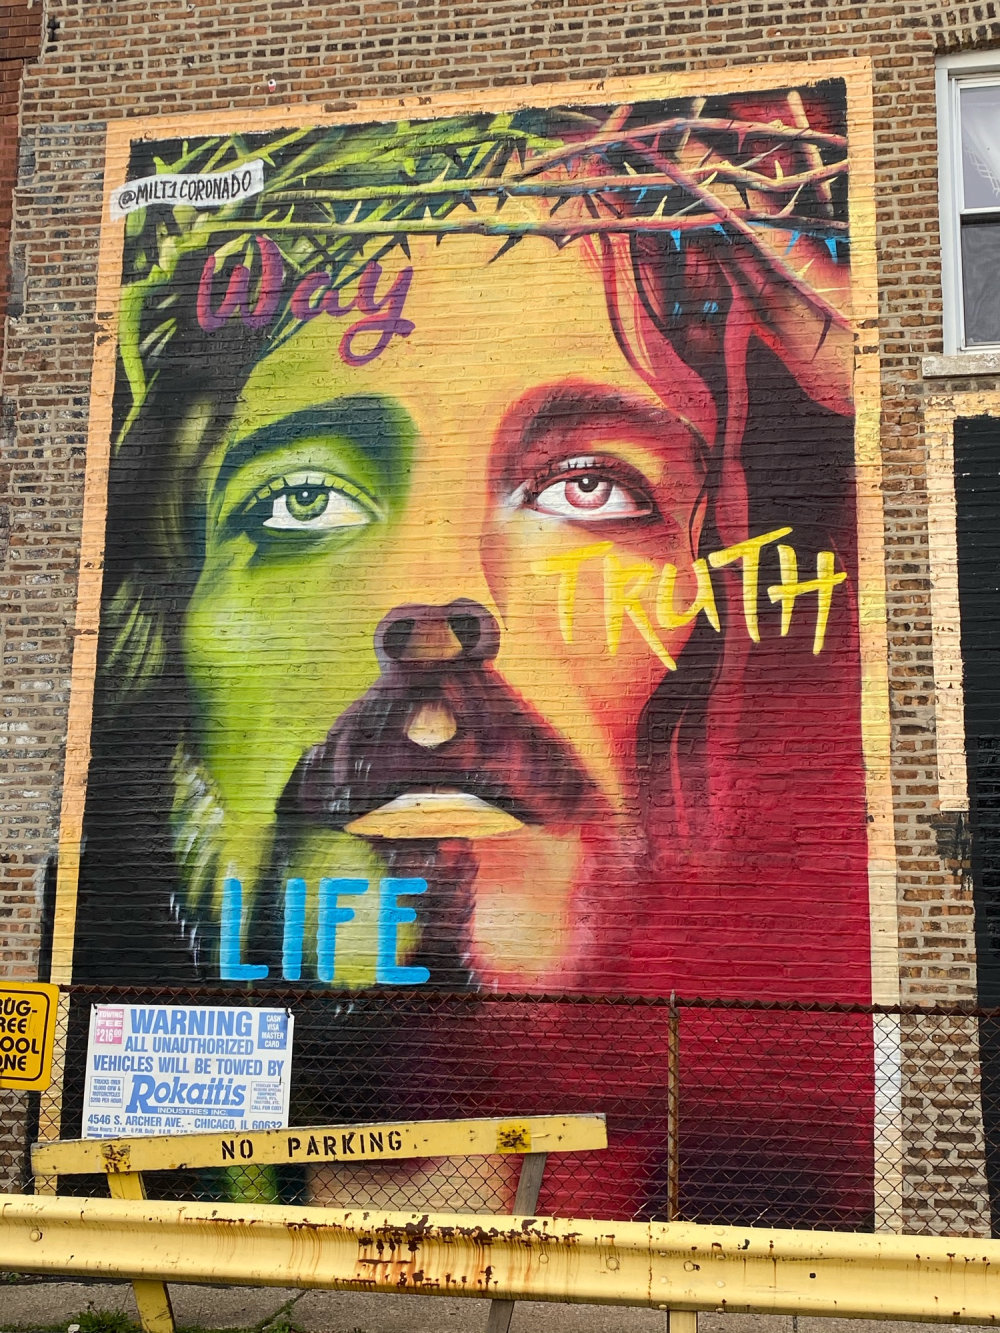 mural in Chicago by artist Milton Coronado.